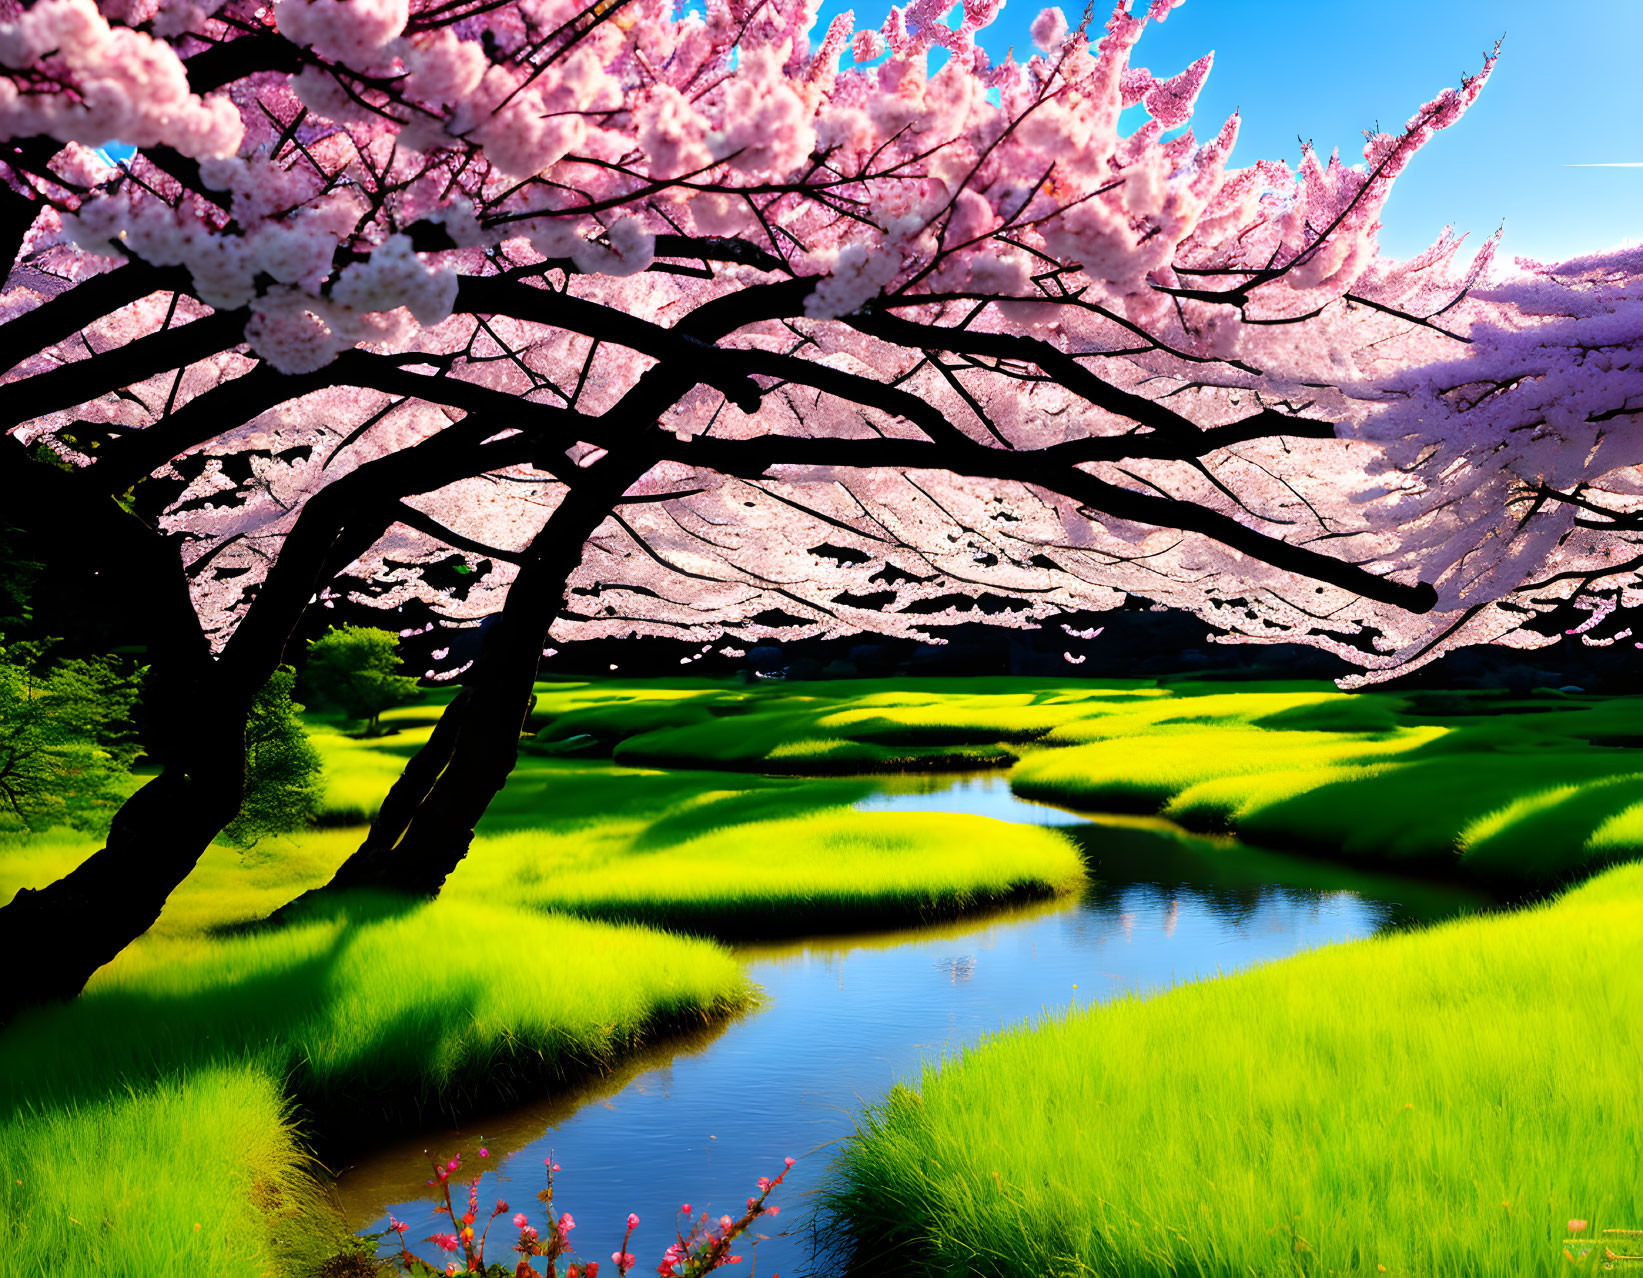 Serene river scene with vibrant cherry blossoms